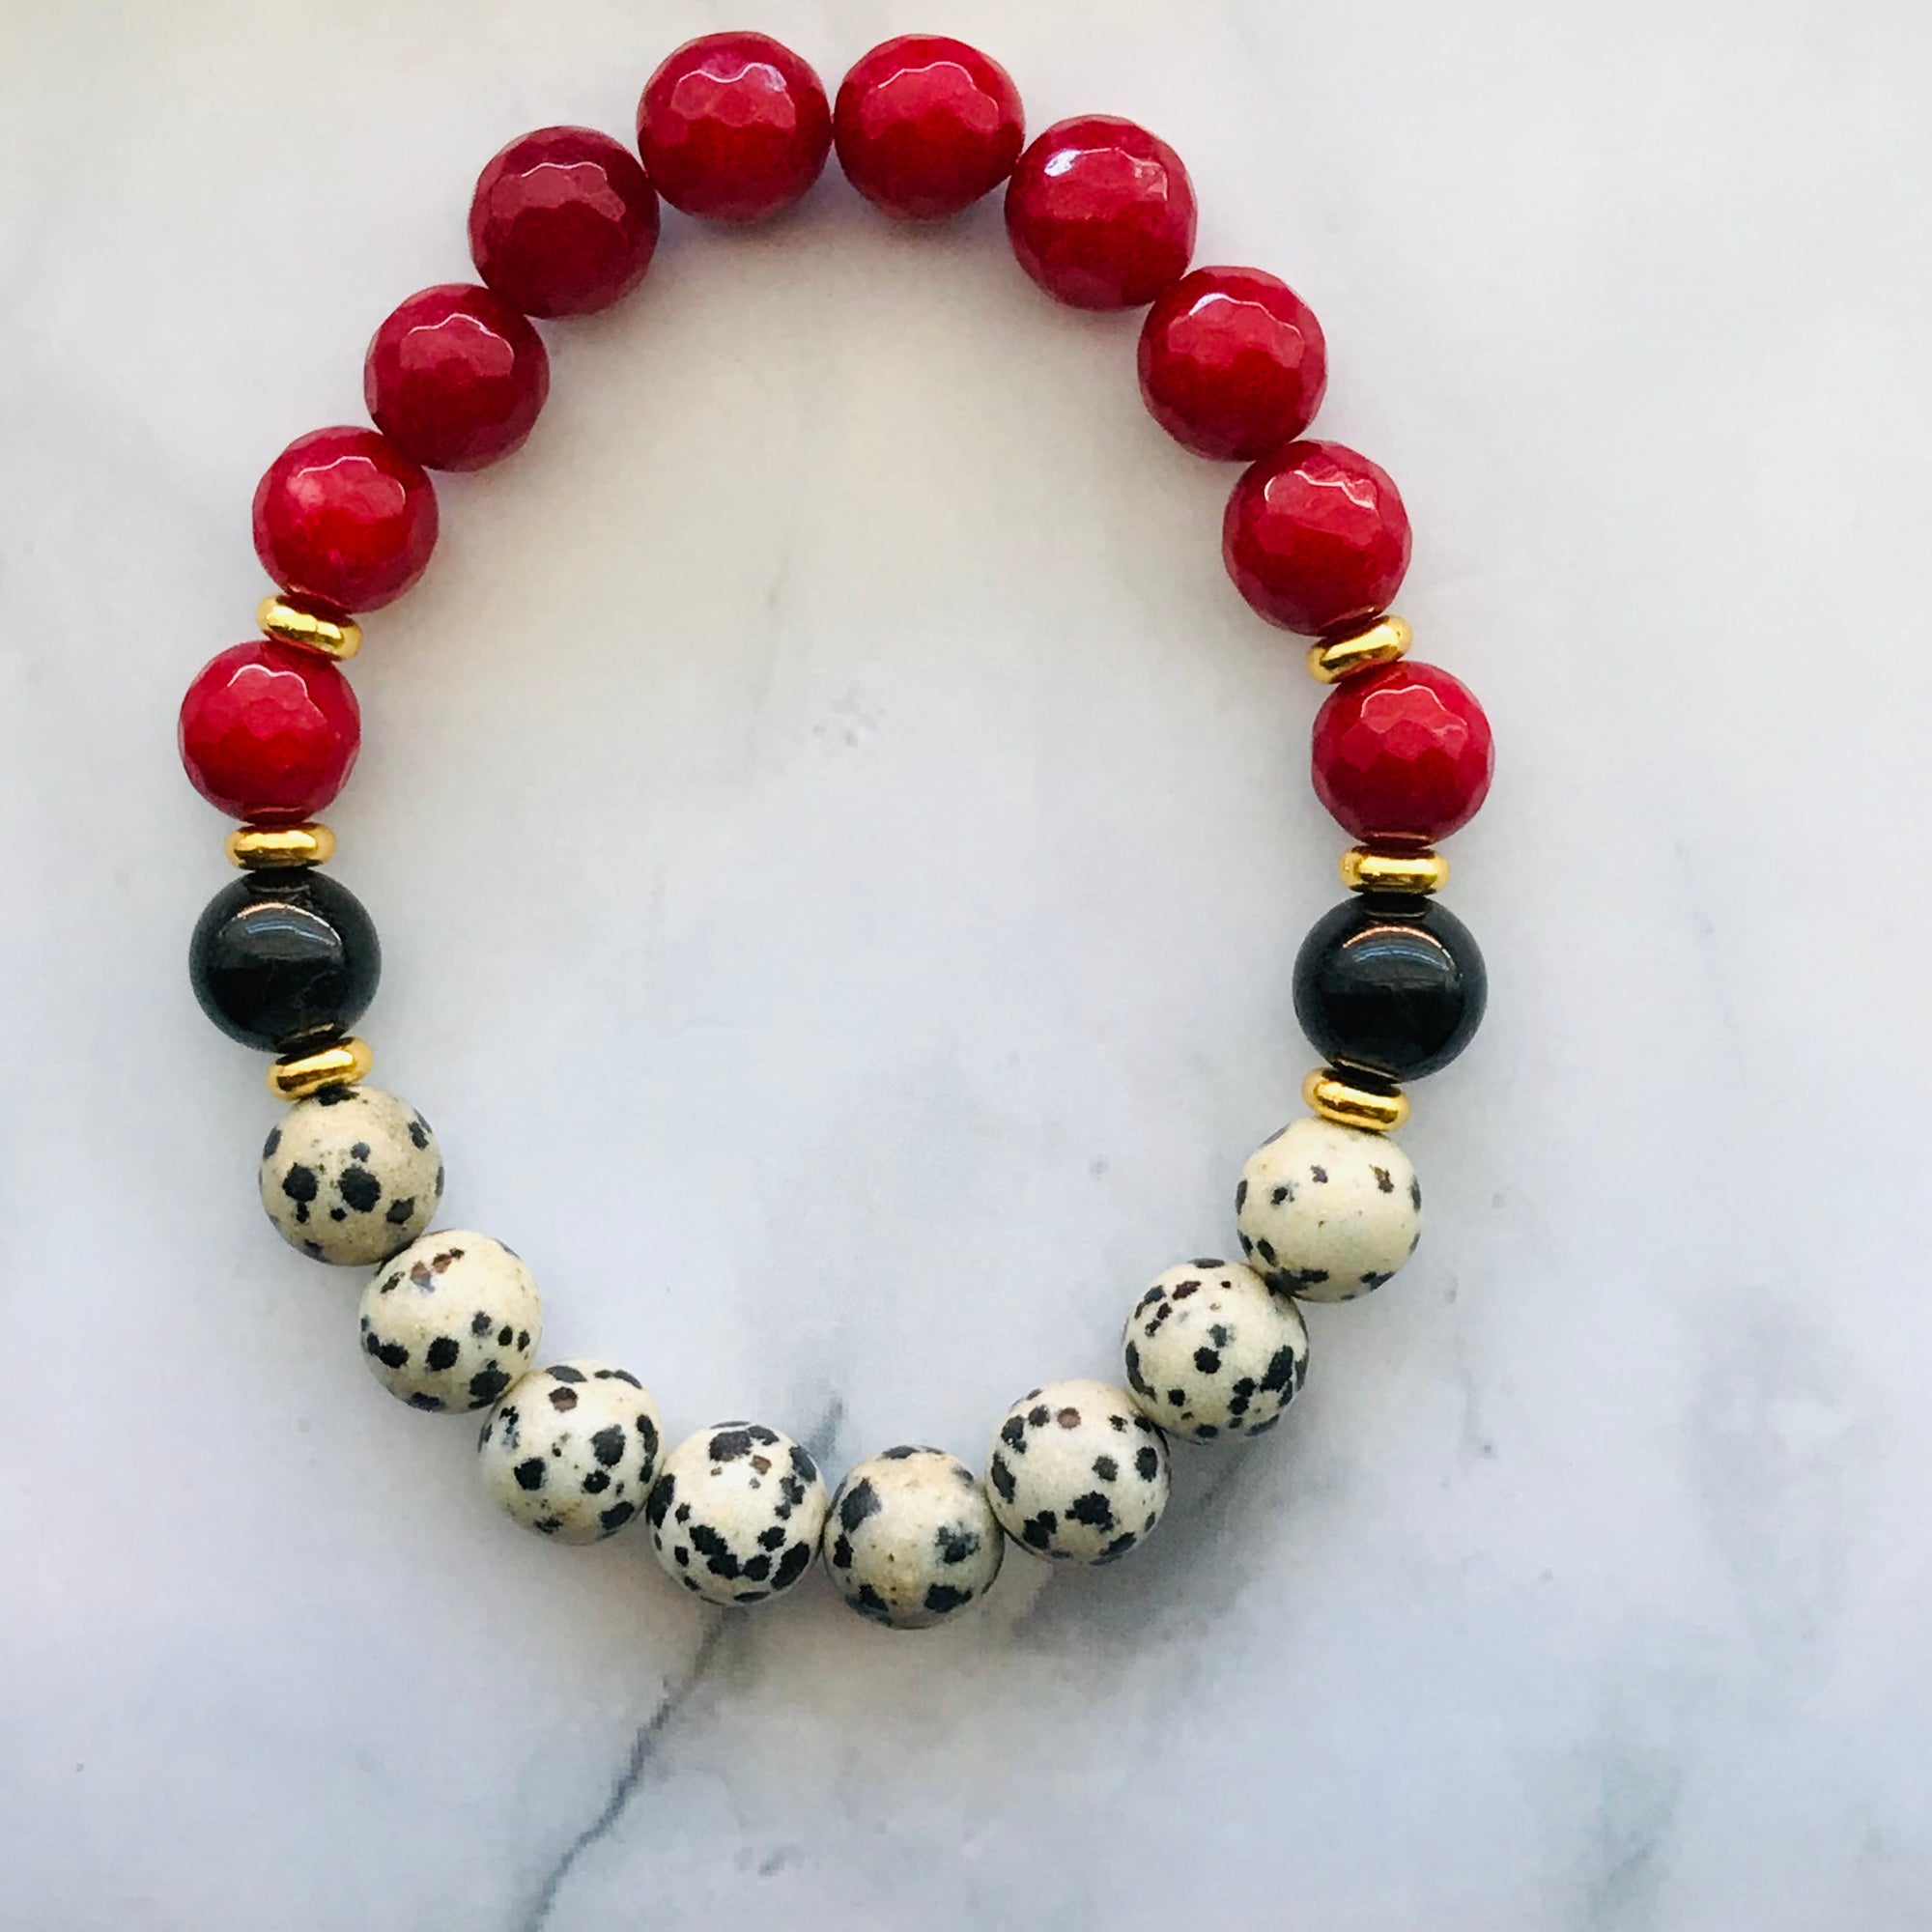 Handmade “Dalmatian” Energy Healing Gemstone Bracelet